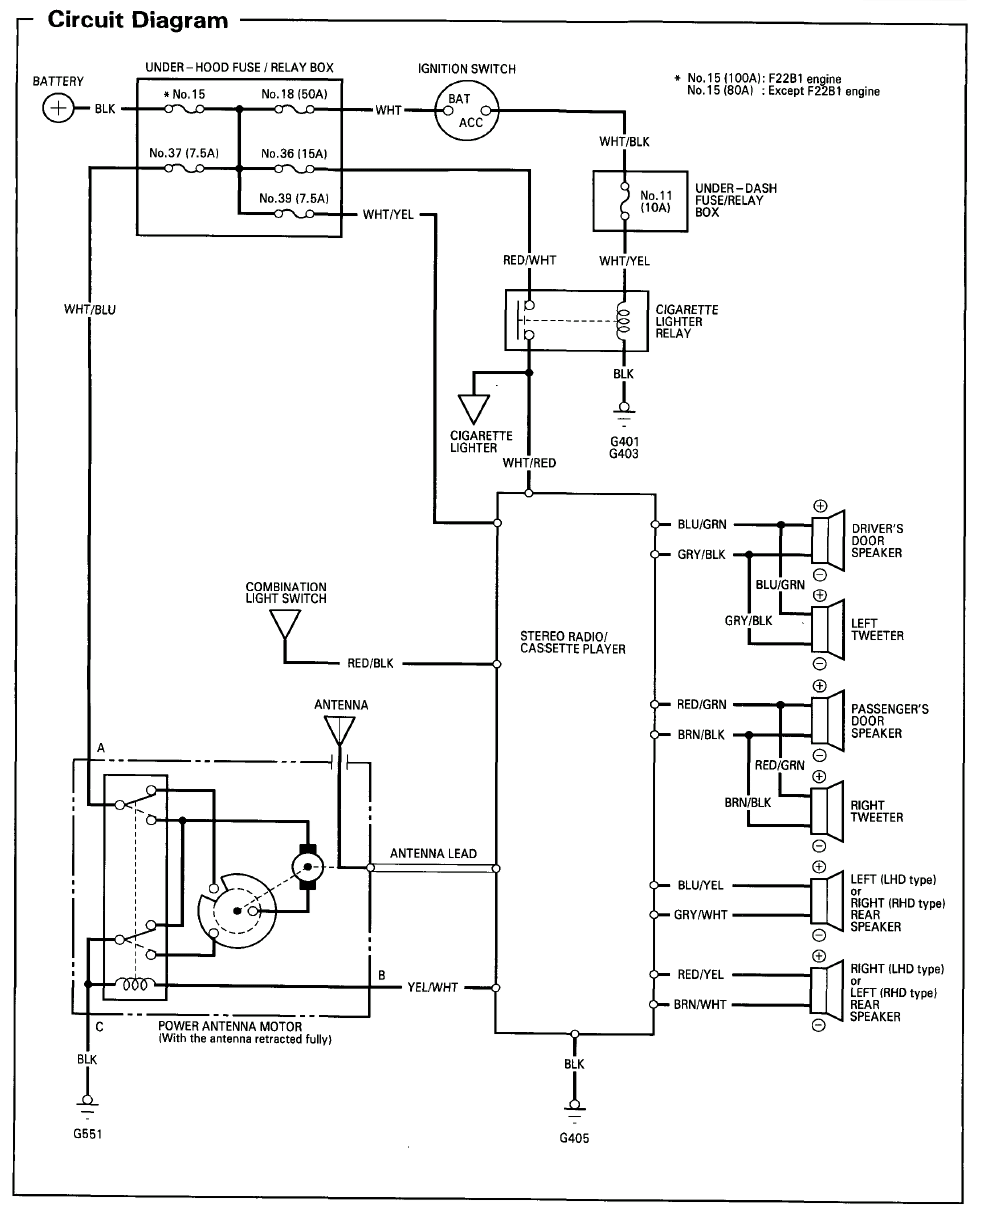 Wiring Diagram Honda Accord 1999 - Wiring Diagram Schemas